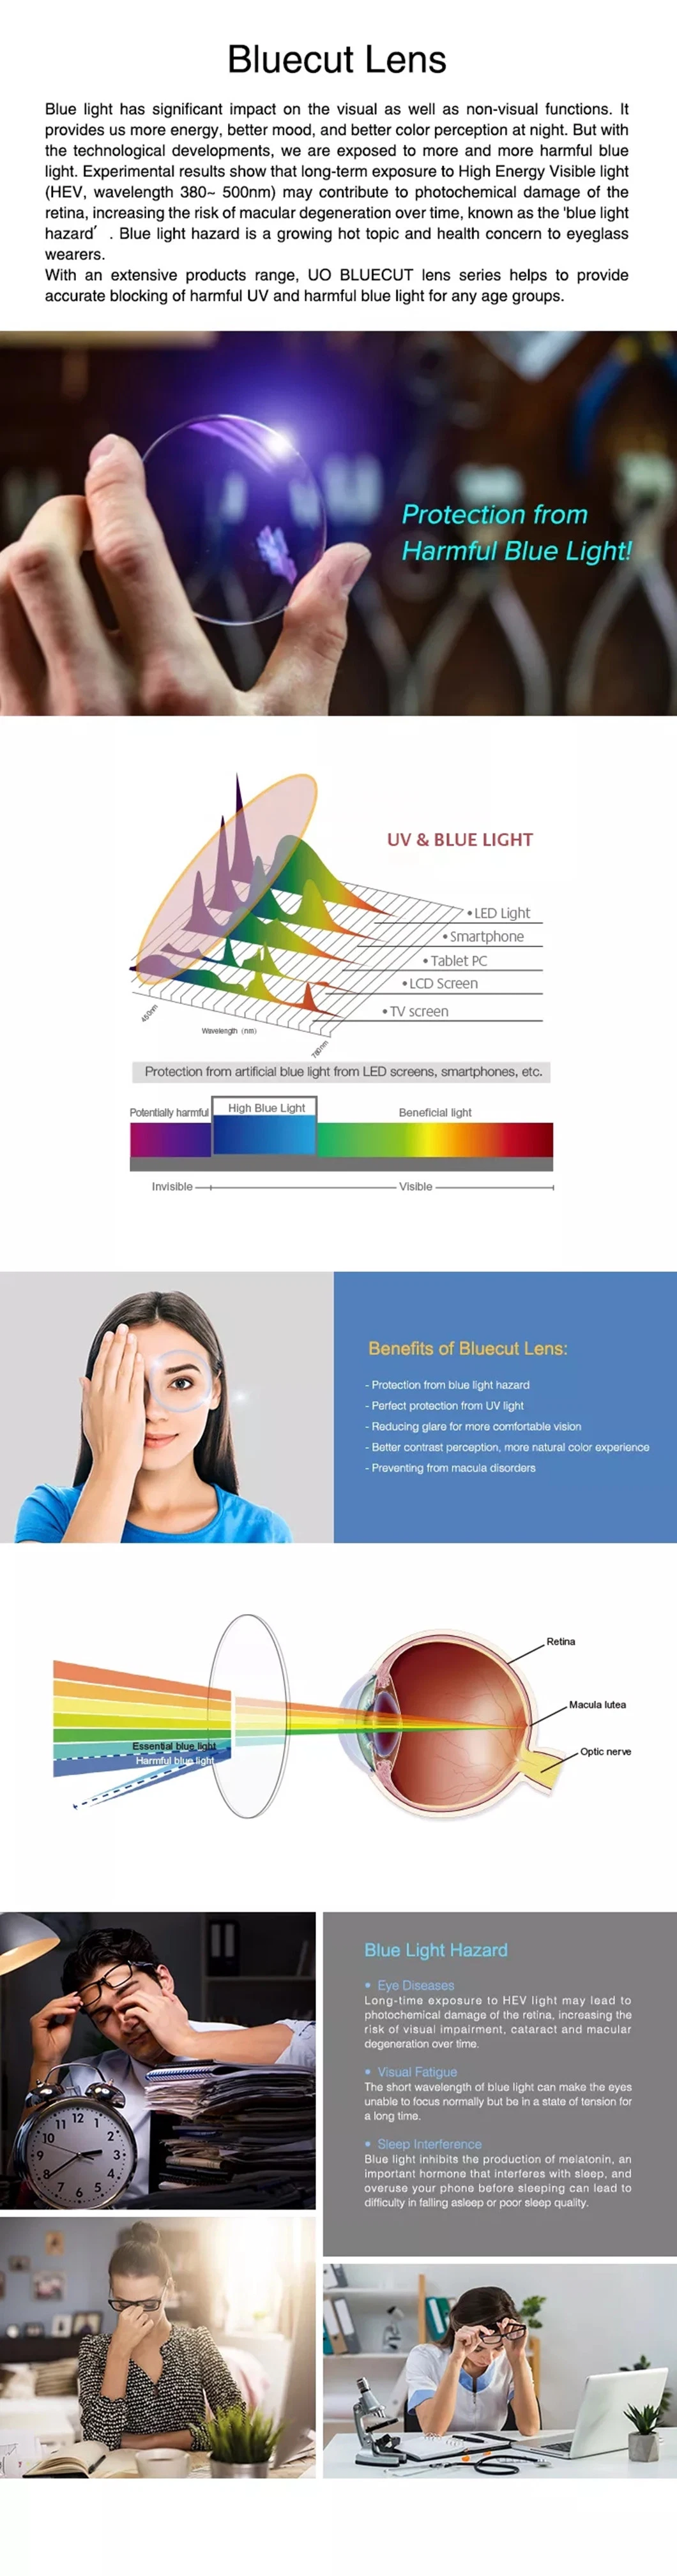 UV420 Blue Cut Factory Price 1.56 Anti Reflective Single Vision Eyeglasses Lens Photogrey Optical Lenses Glasses Lens